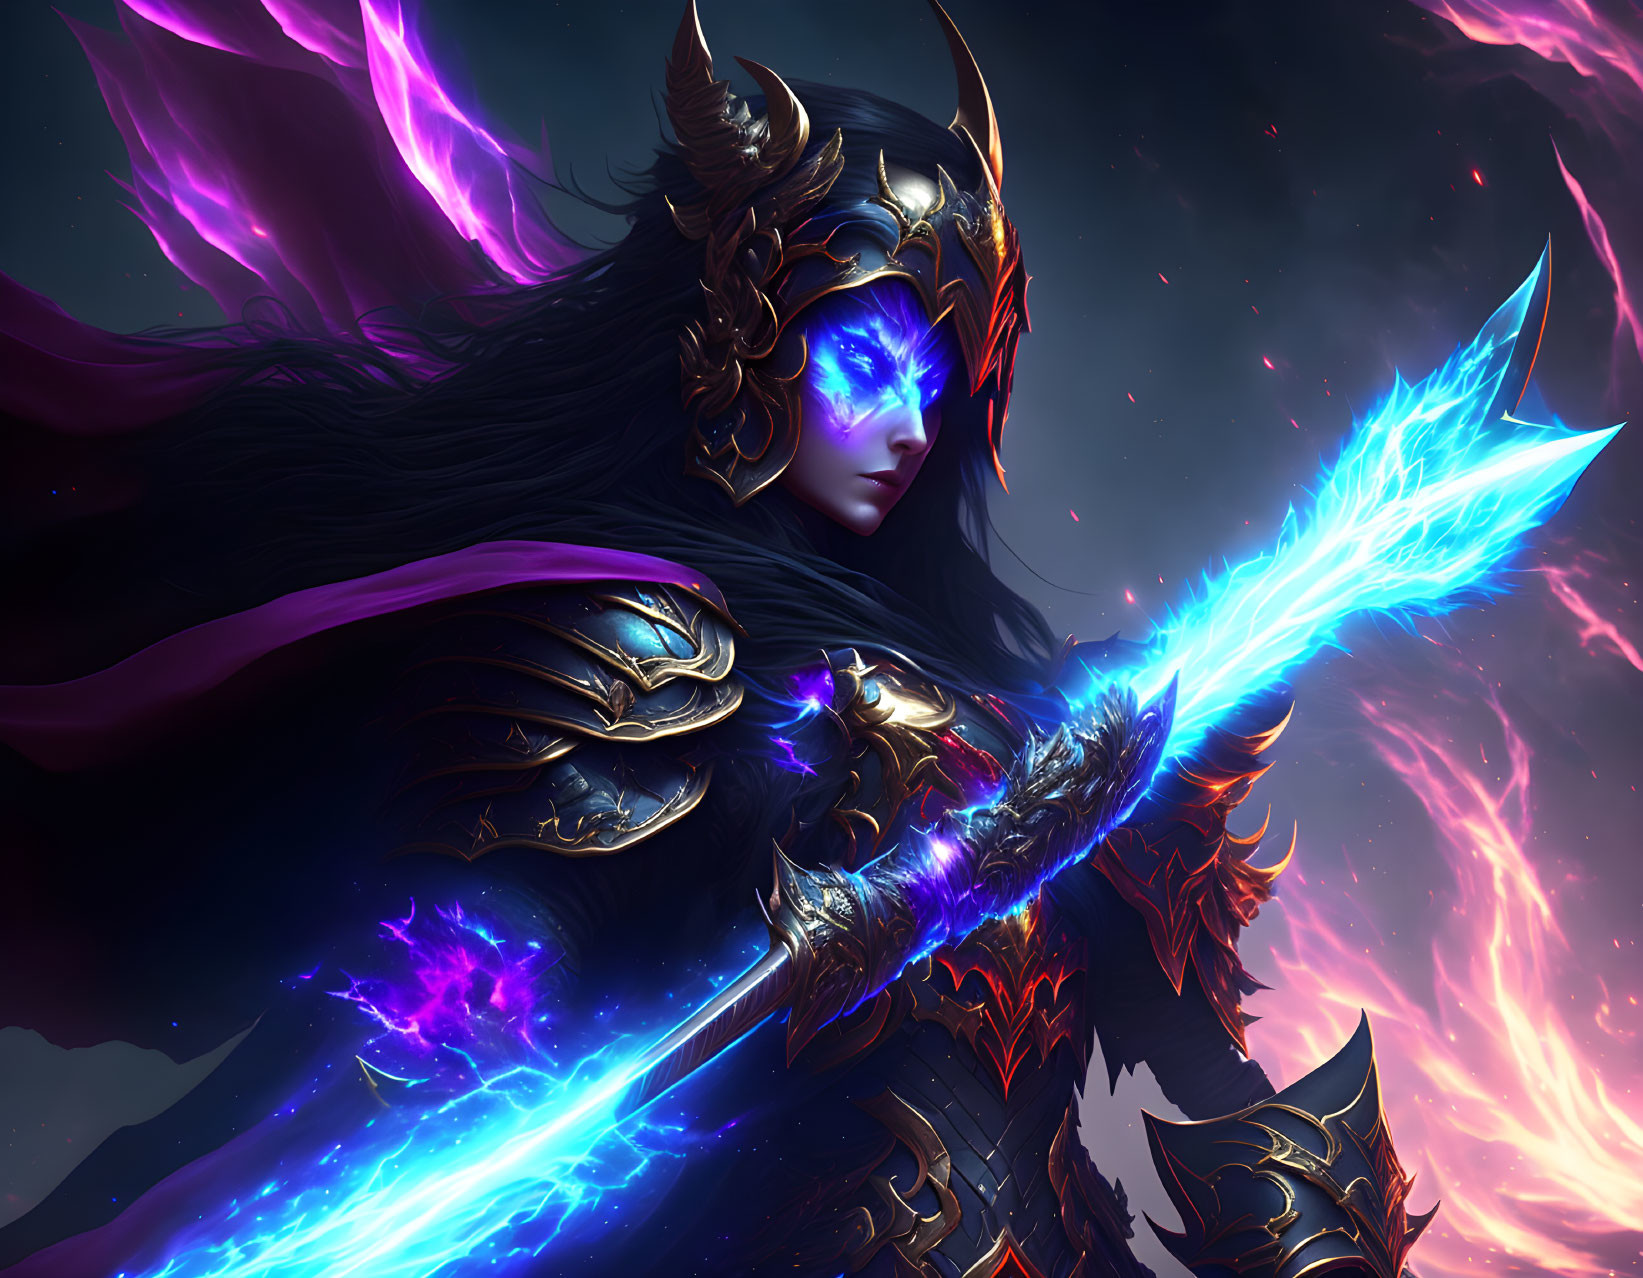 Fantasy warrior in dark armor wields blue energy spear